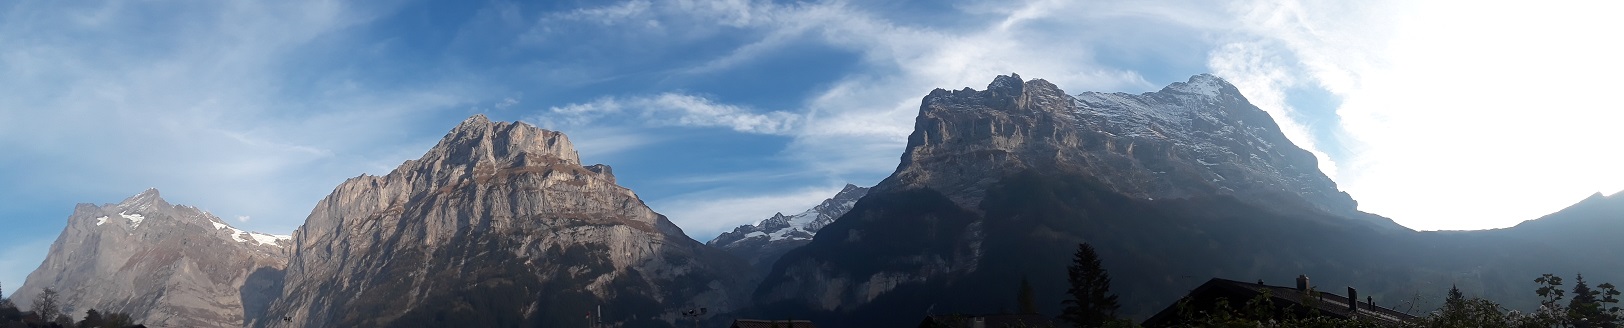 Grindelwald Panoramic 2